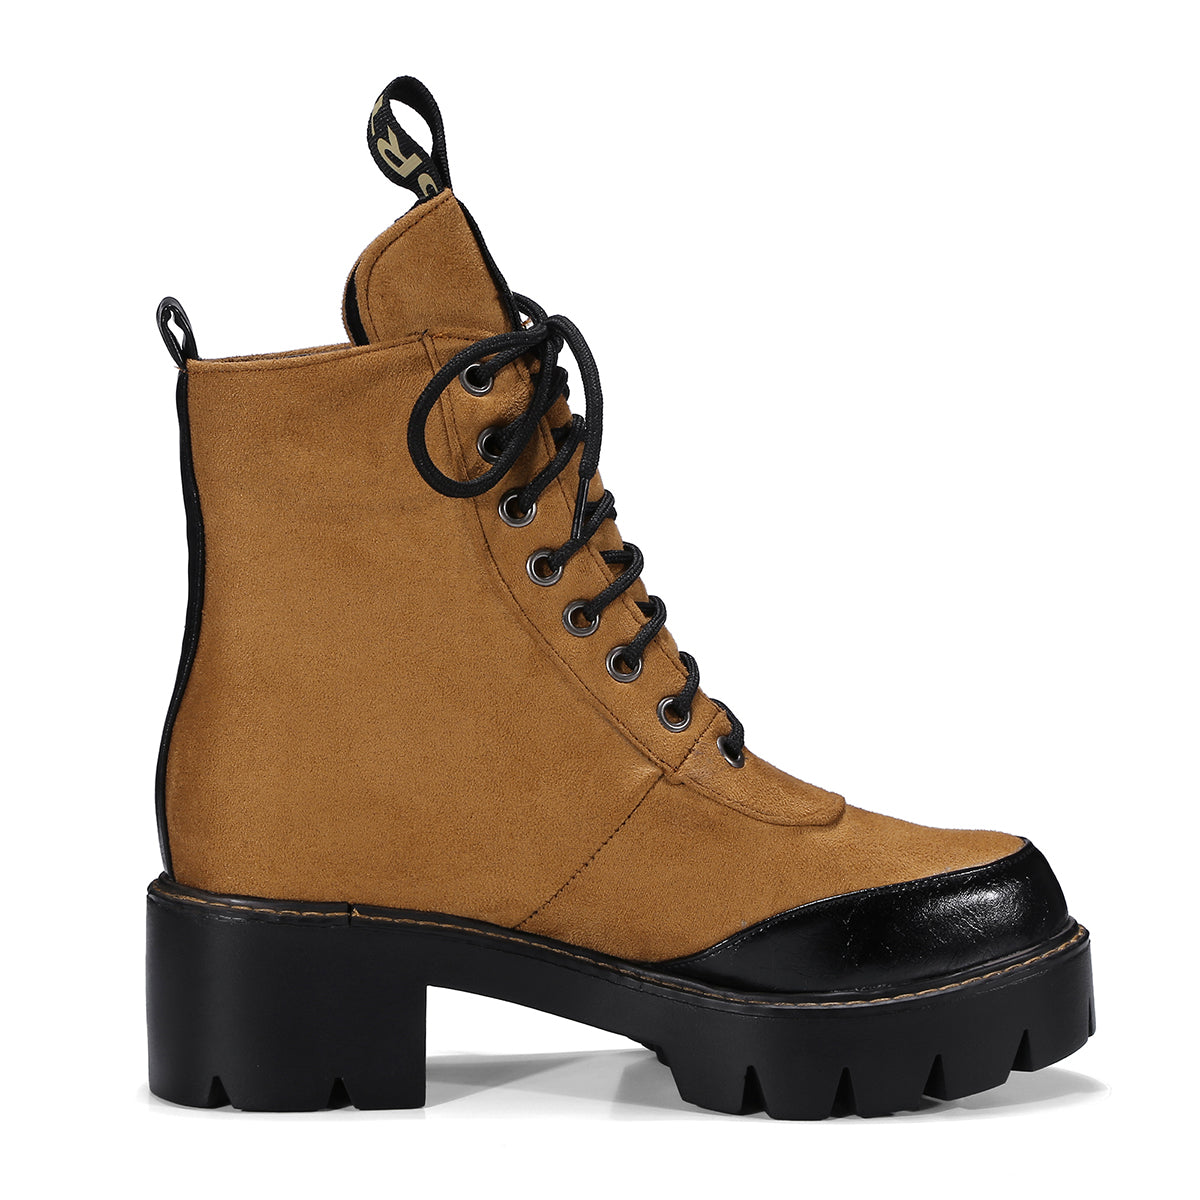 Bigsizeheels Round toe color strap Martin boots - Yellow freeshipping - bigsizeheel®-size5-size15 -All Plus Sizes Available!